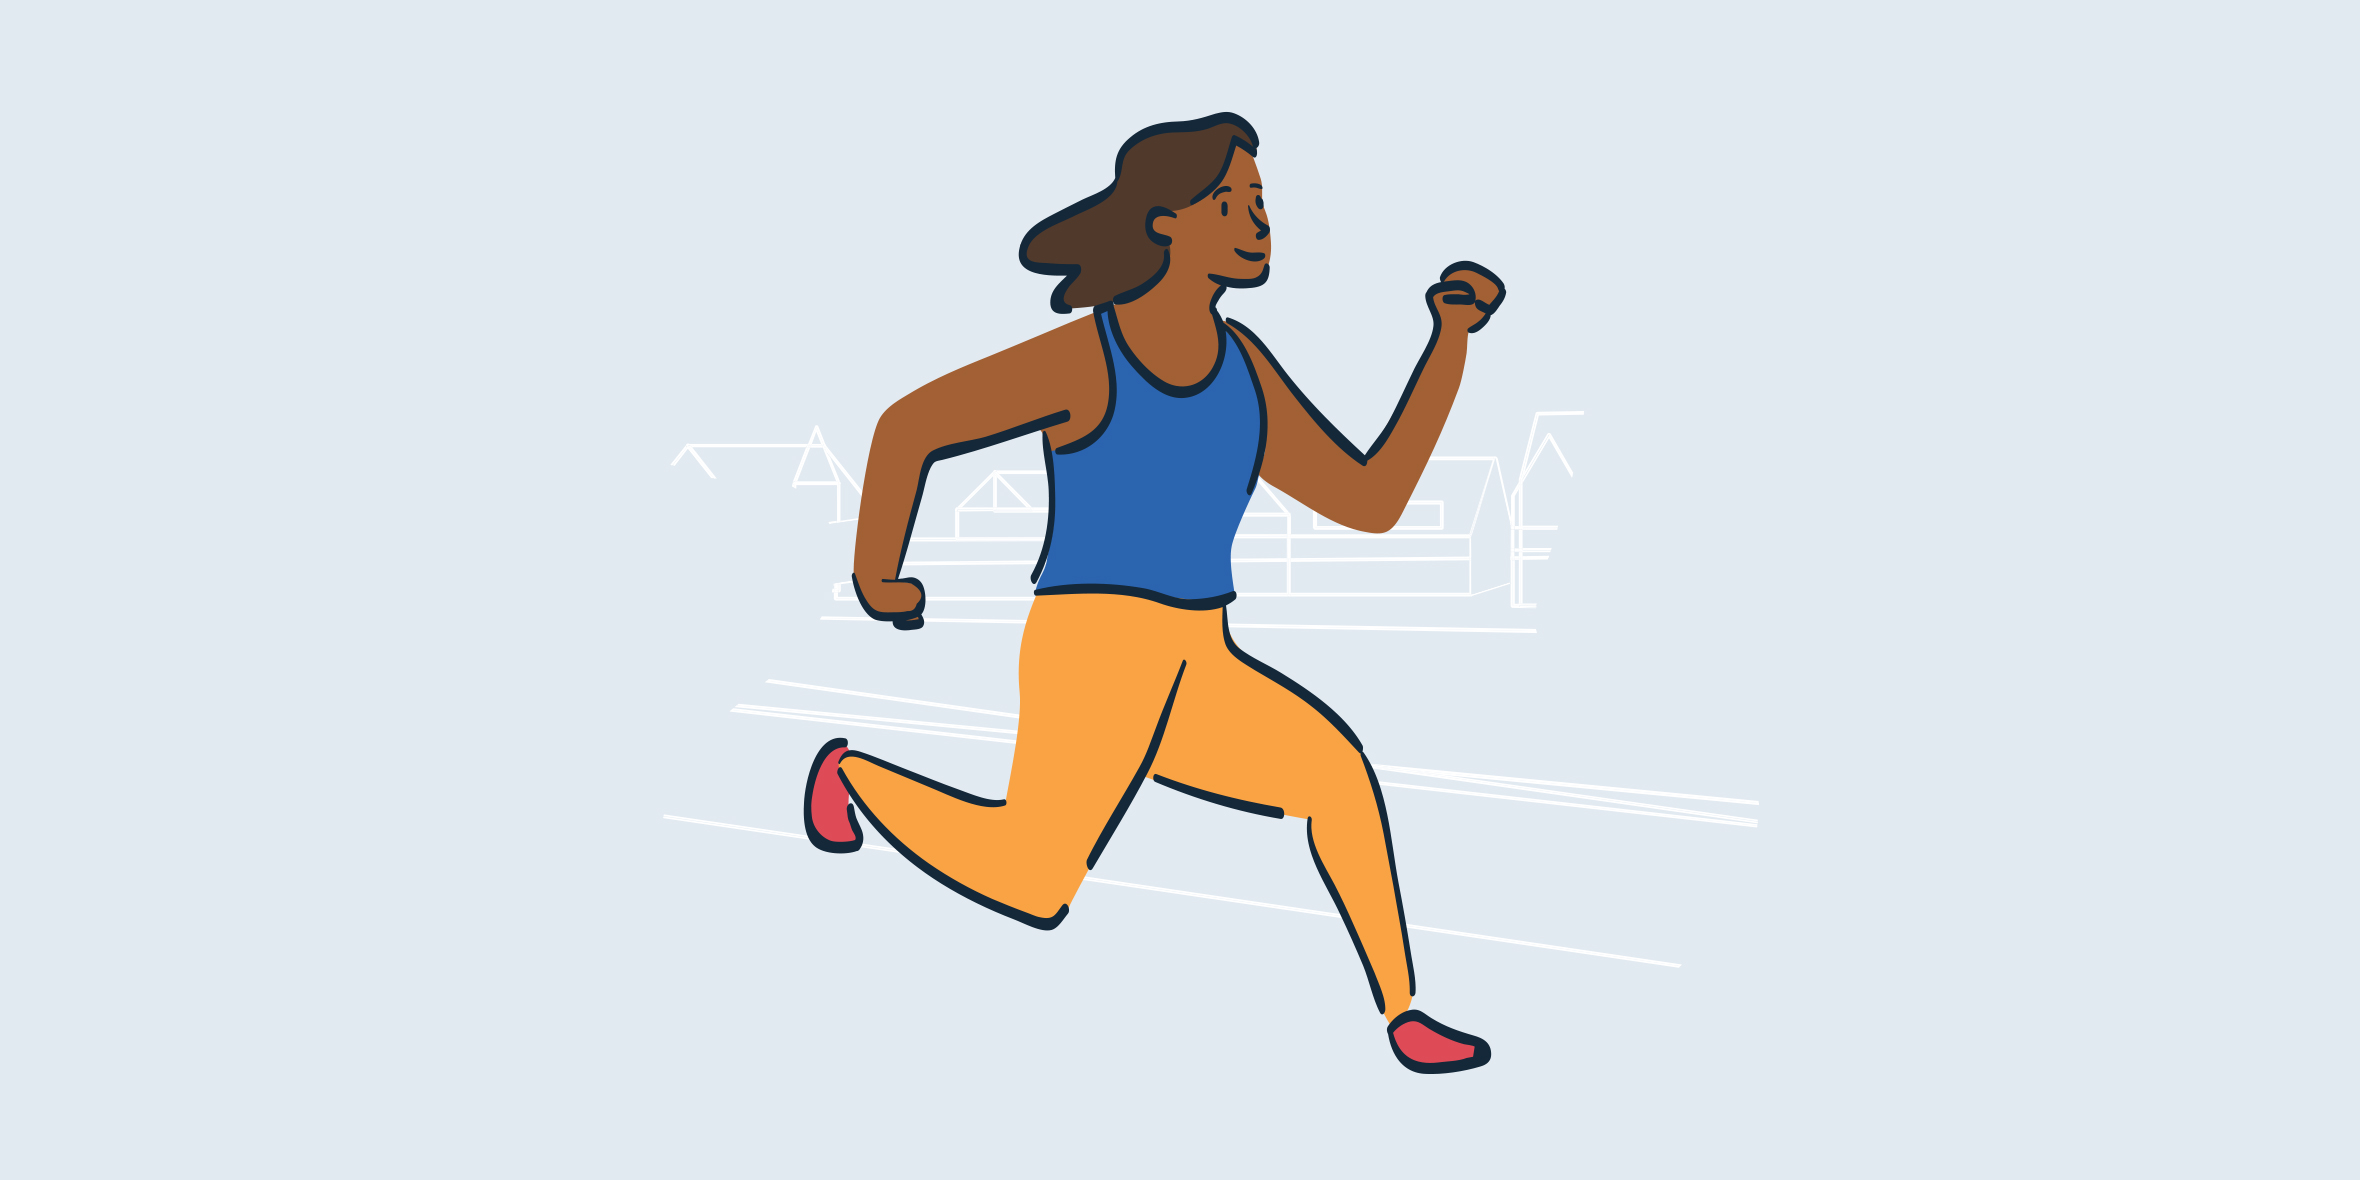 illustration of woman running